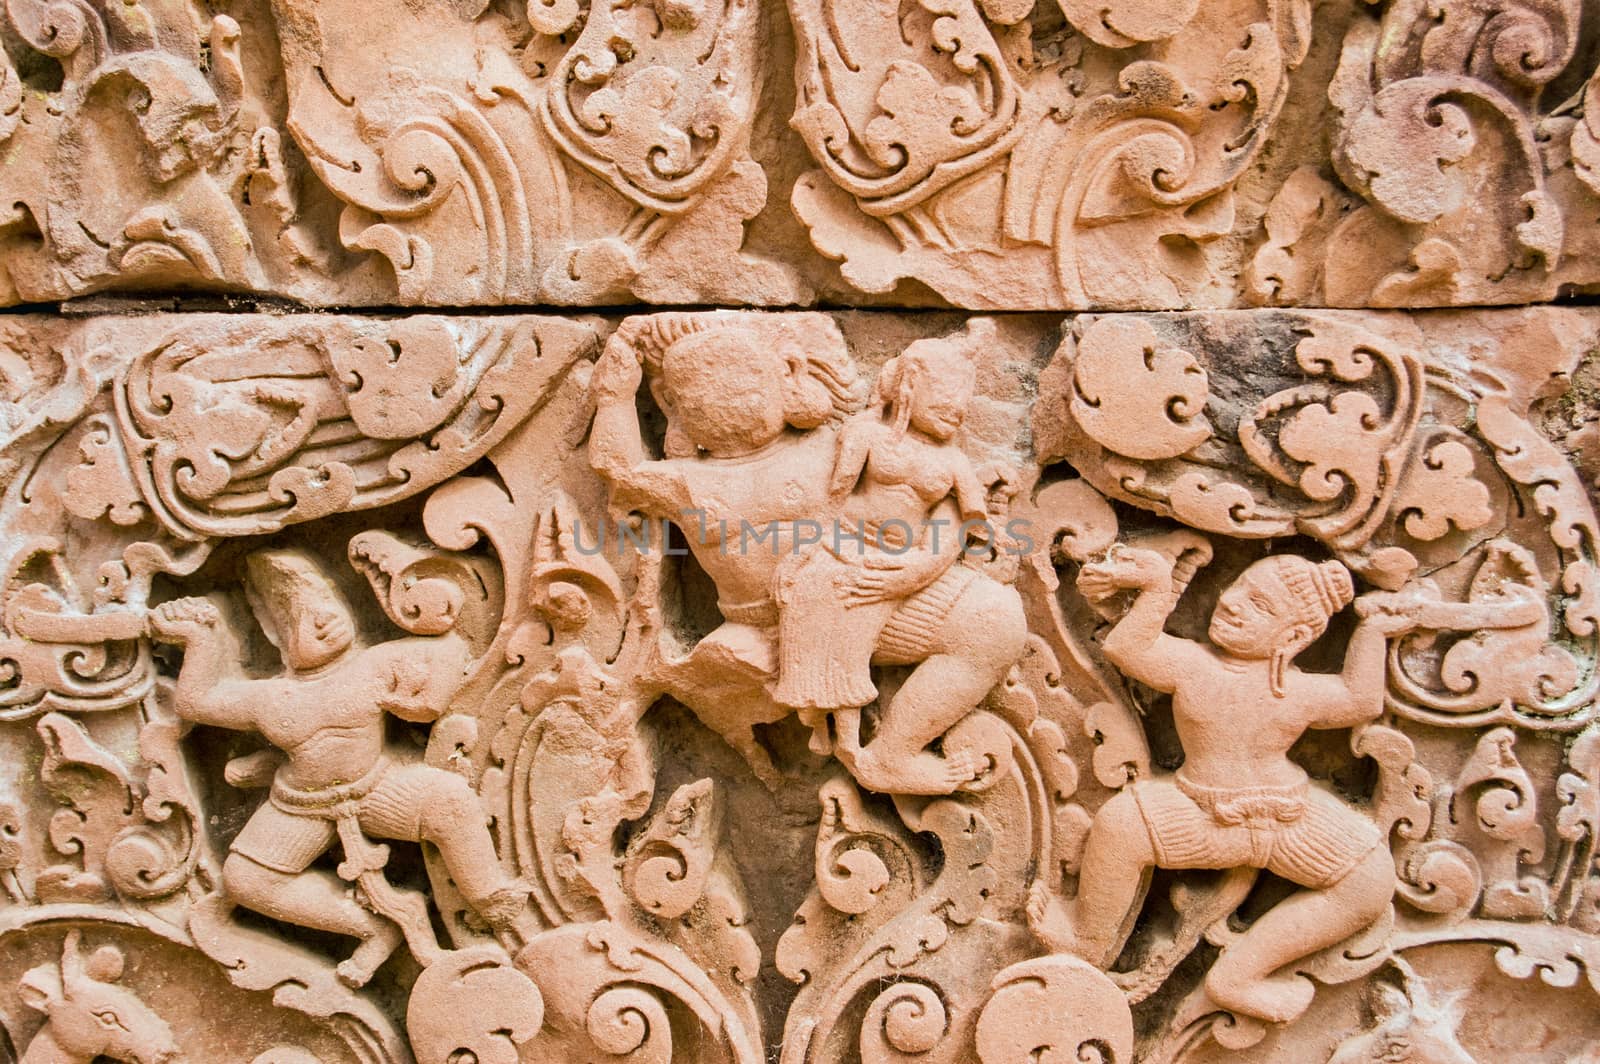 Ravan abducting Sita carving by BasPhoto